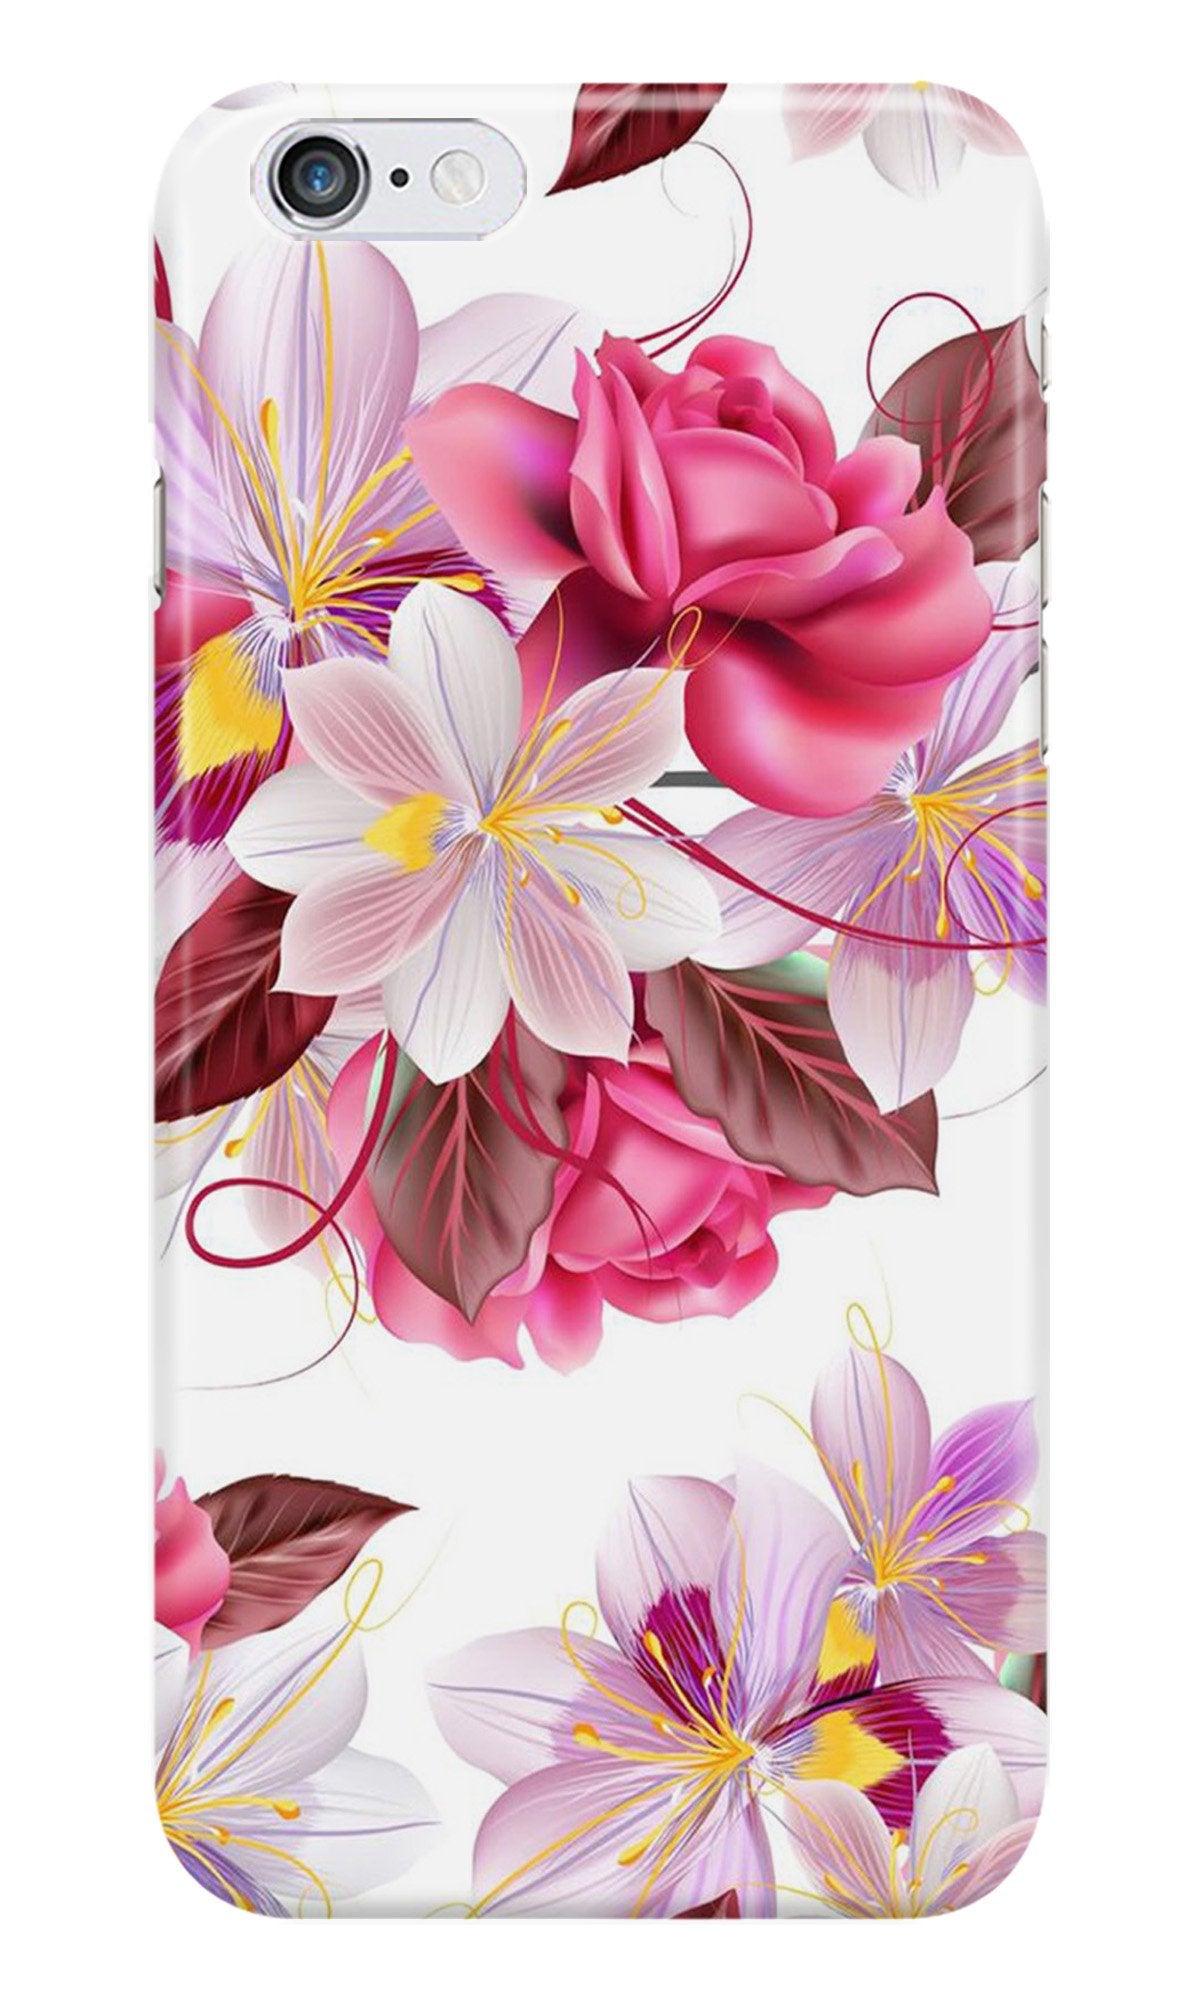 Beautiful flowers Case for iPhone 6 Plus/ 6s Plus